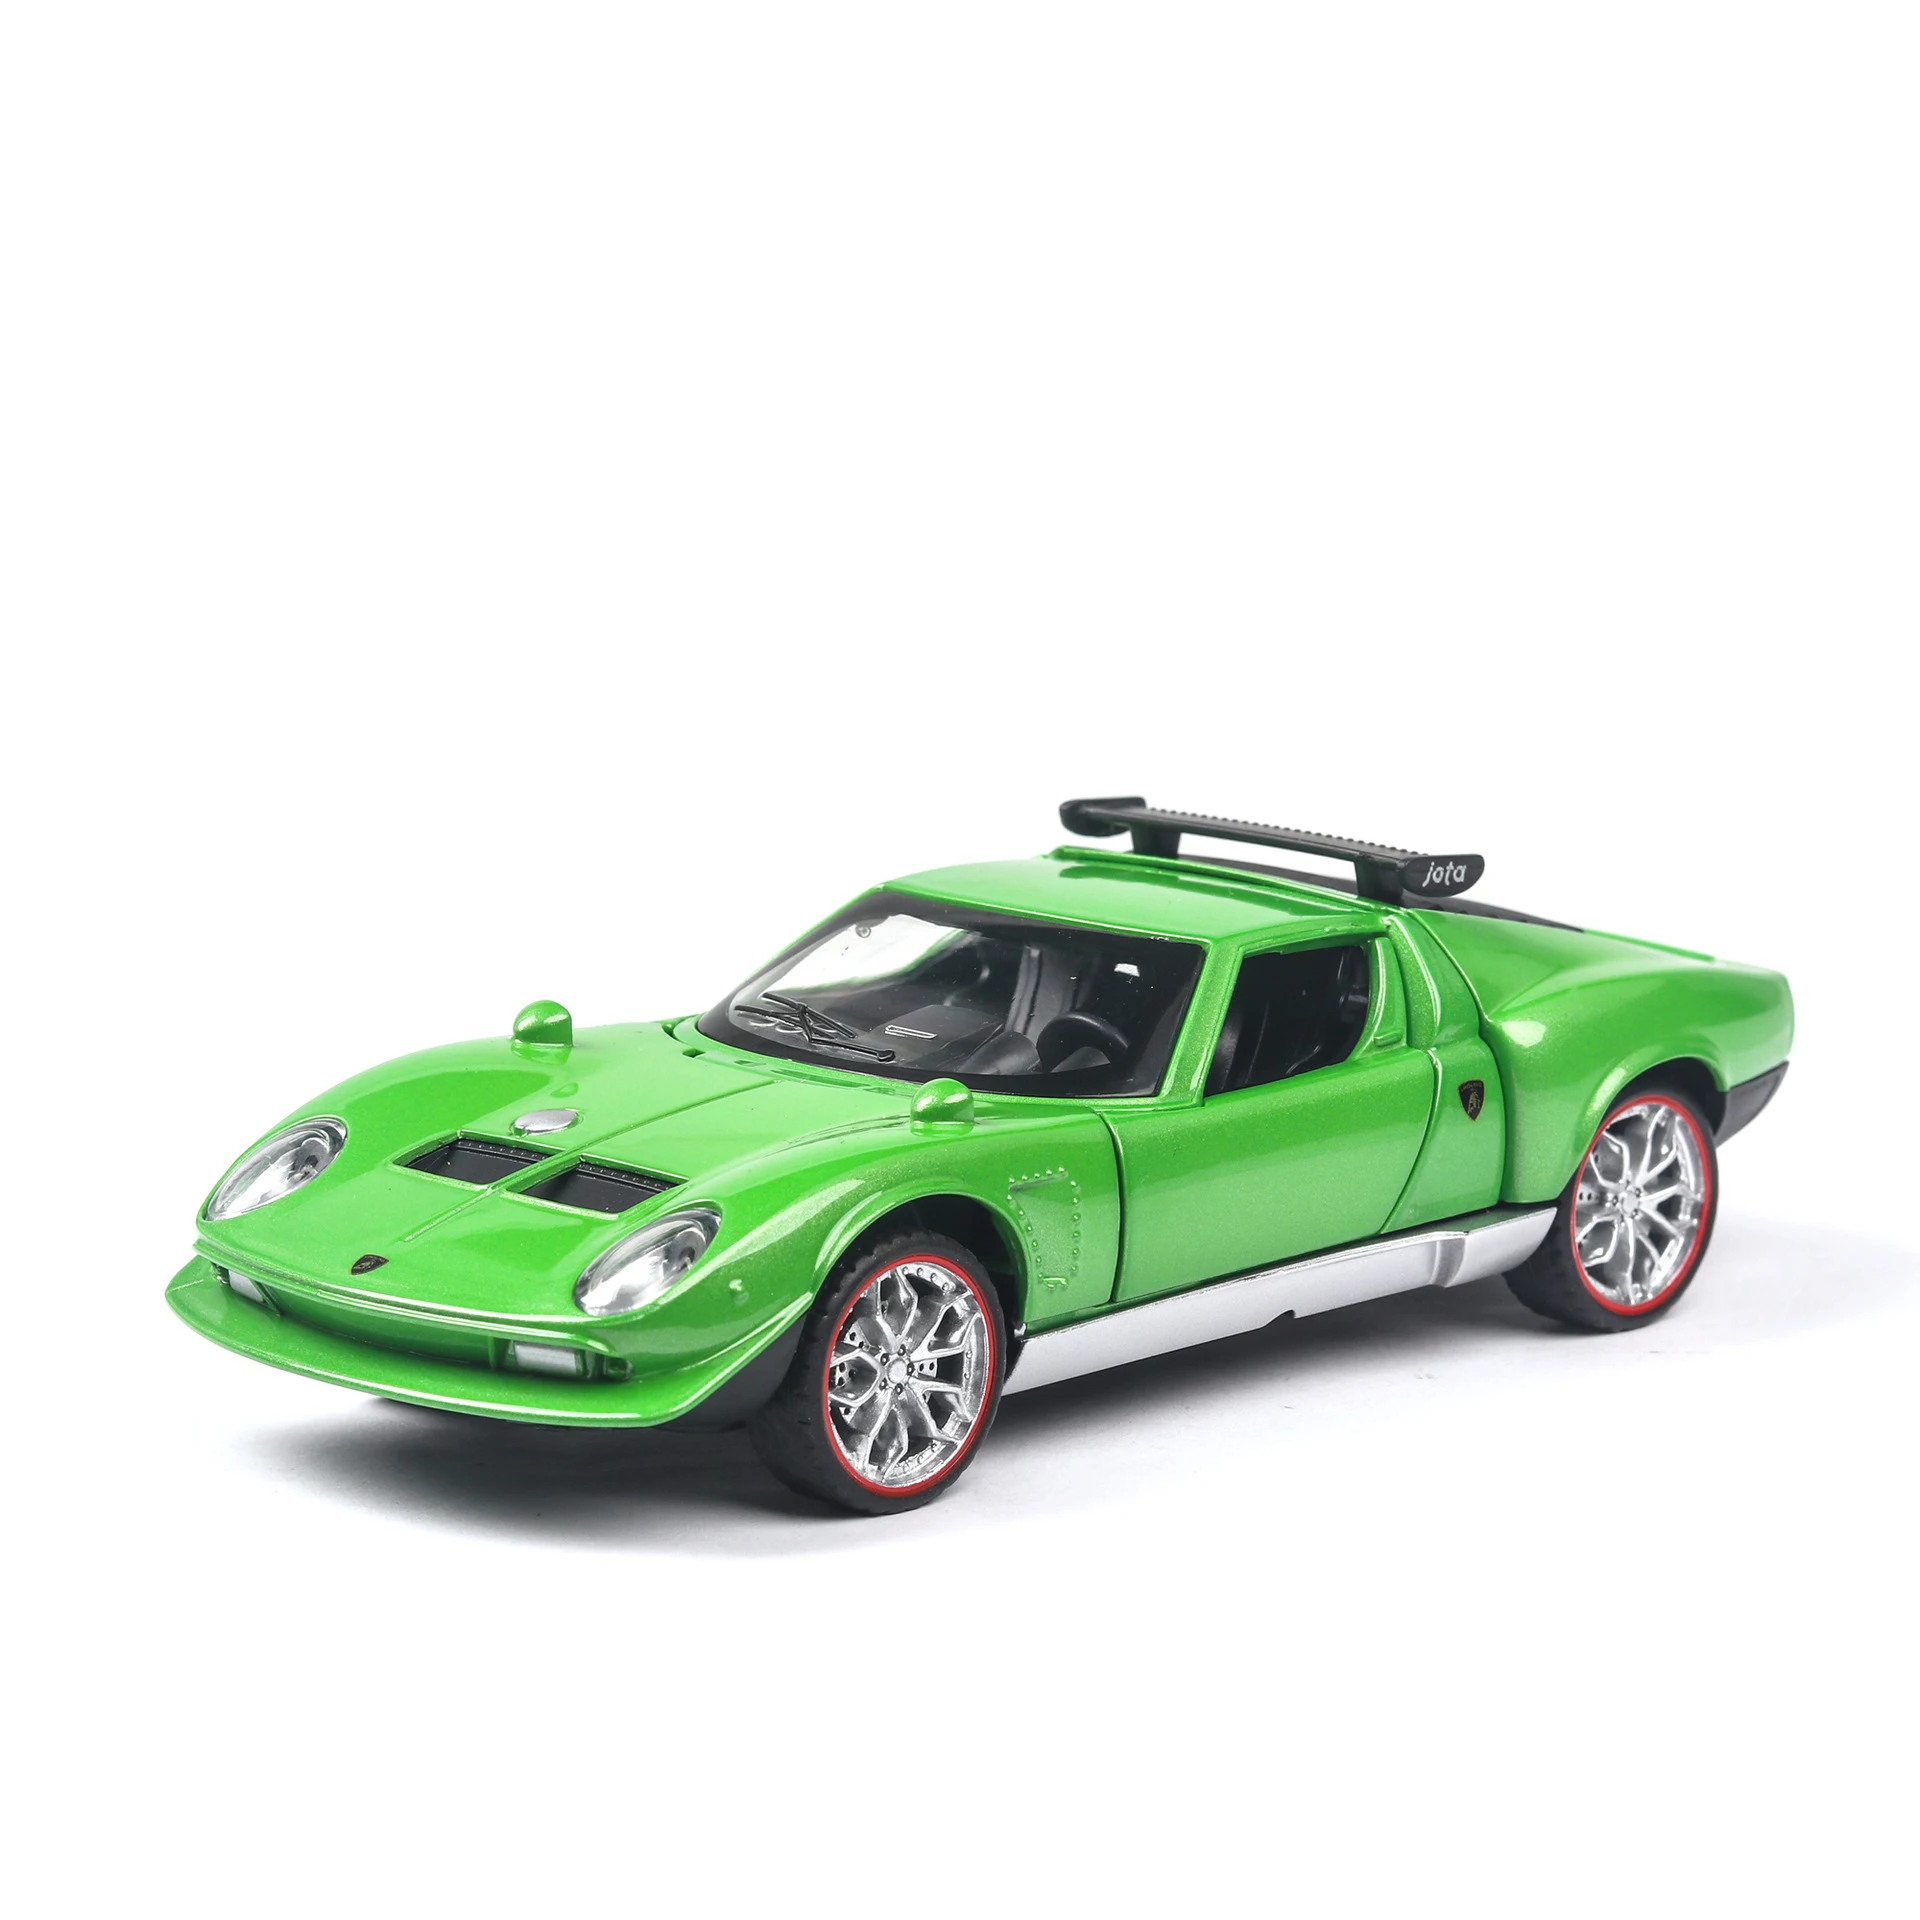 

1:32 Lamborghini Mura Alloy car model sports car return force acousto optic toy set